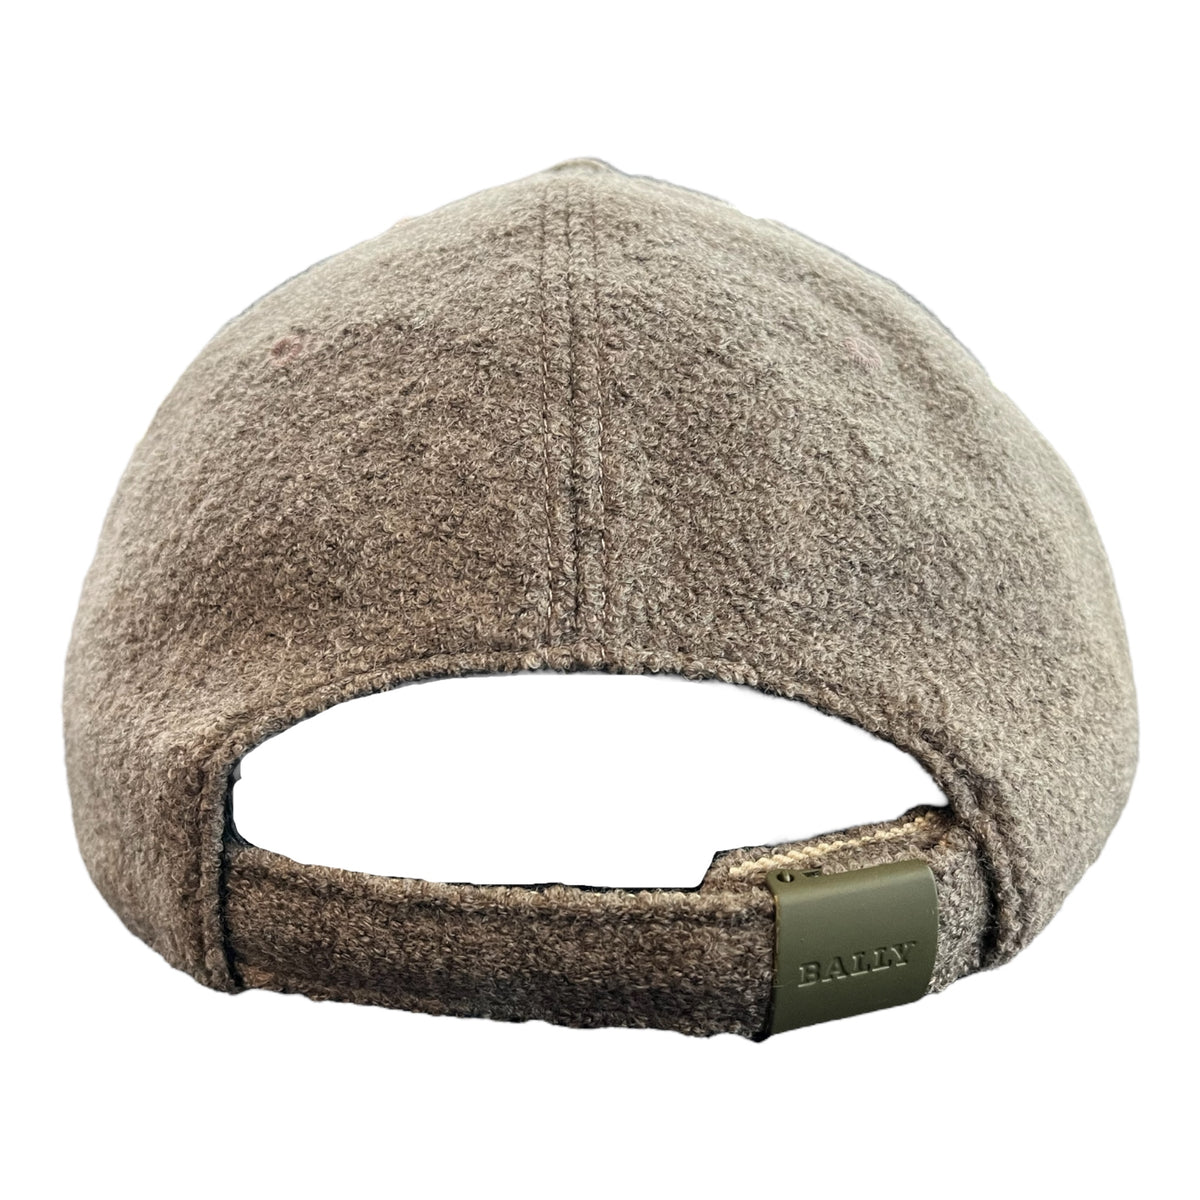 Bally Wool & Leather Adjustable Cap